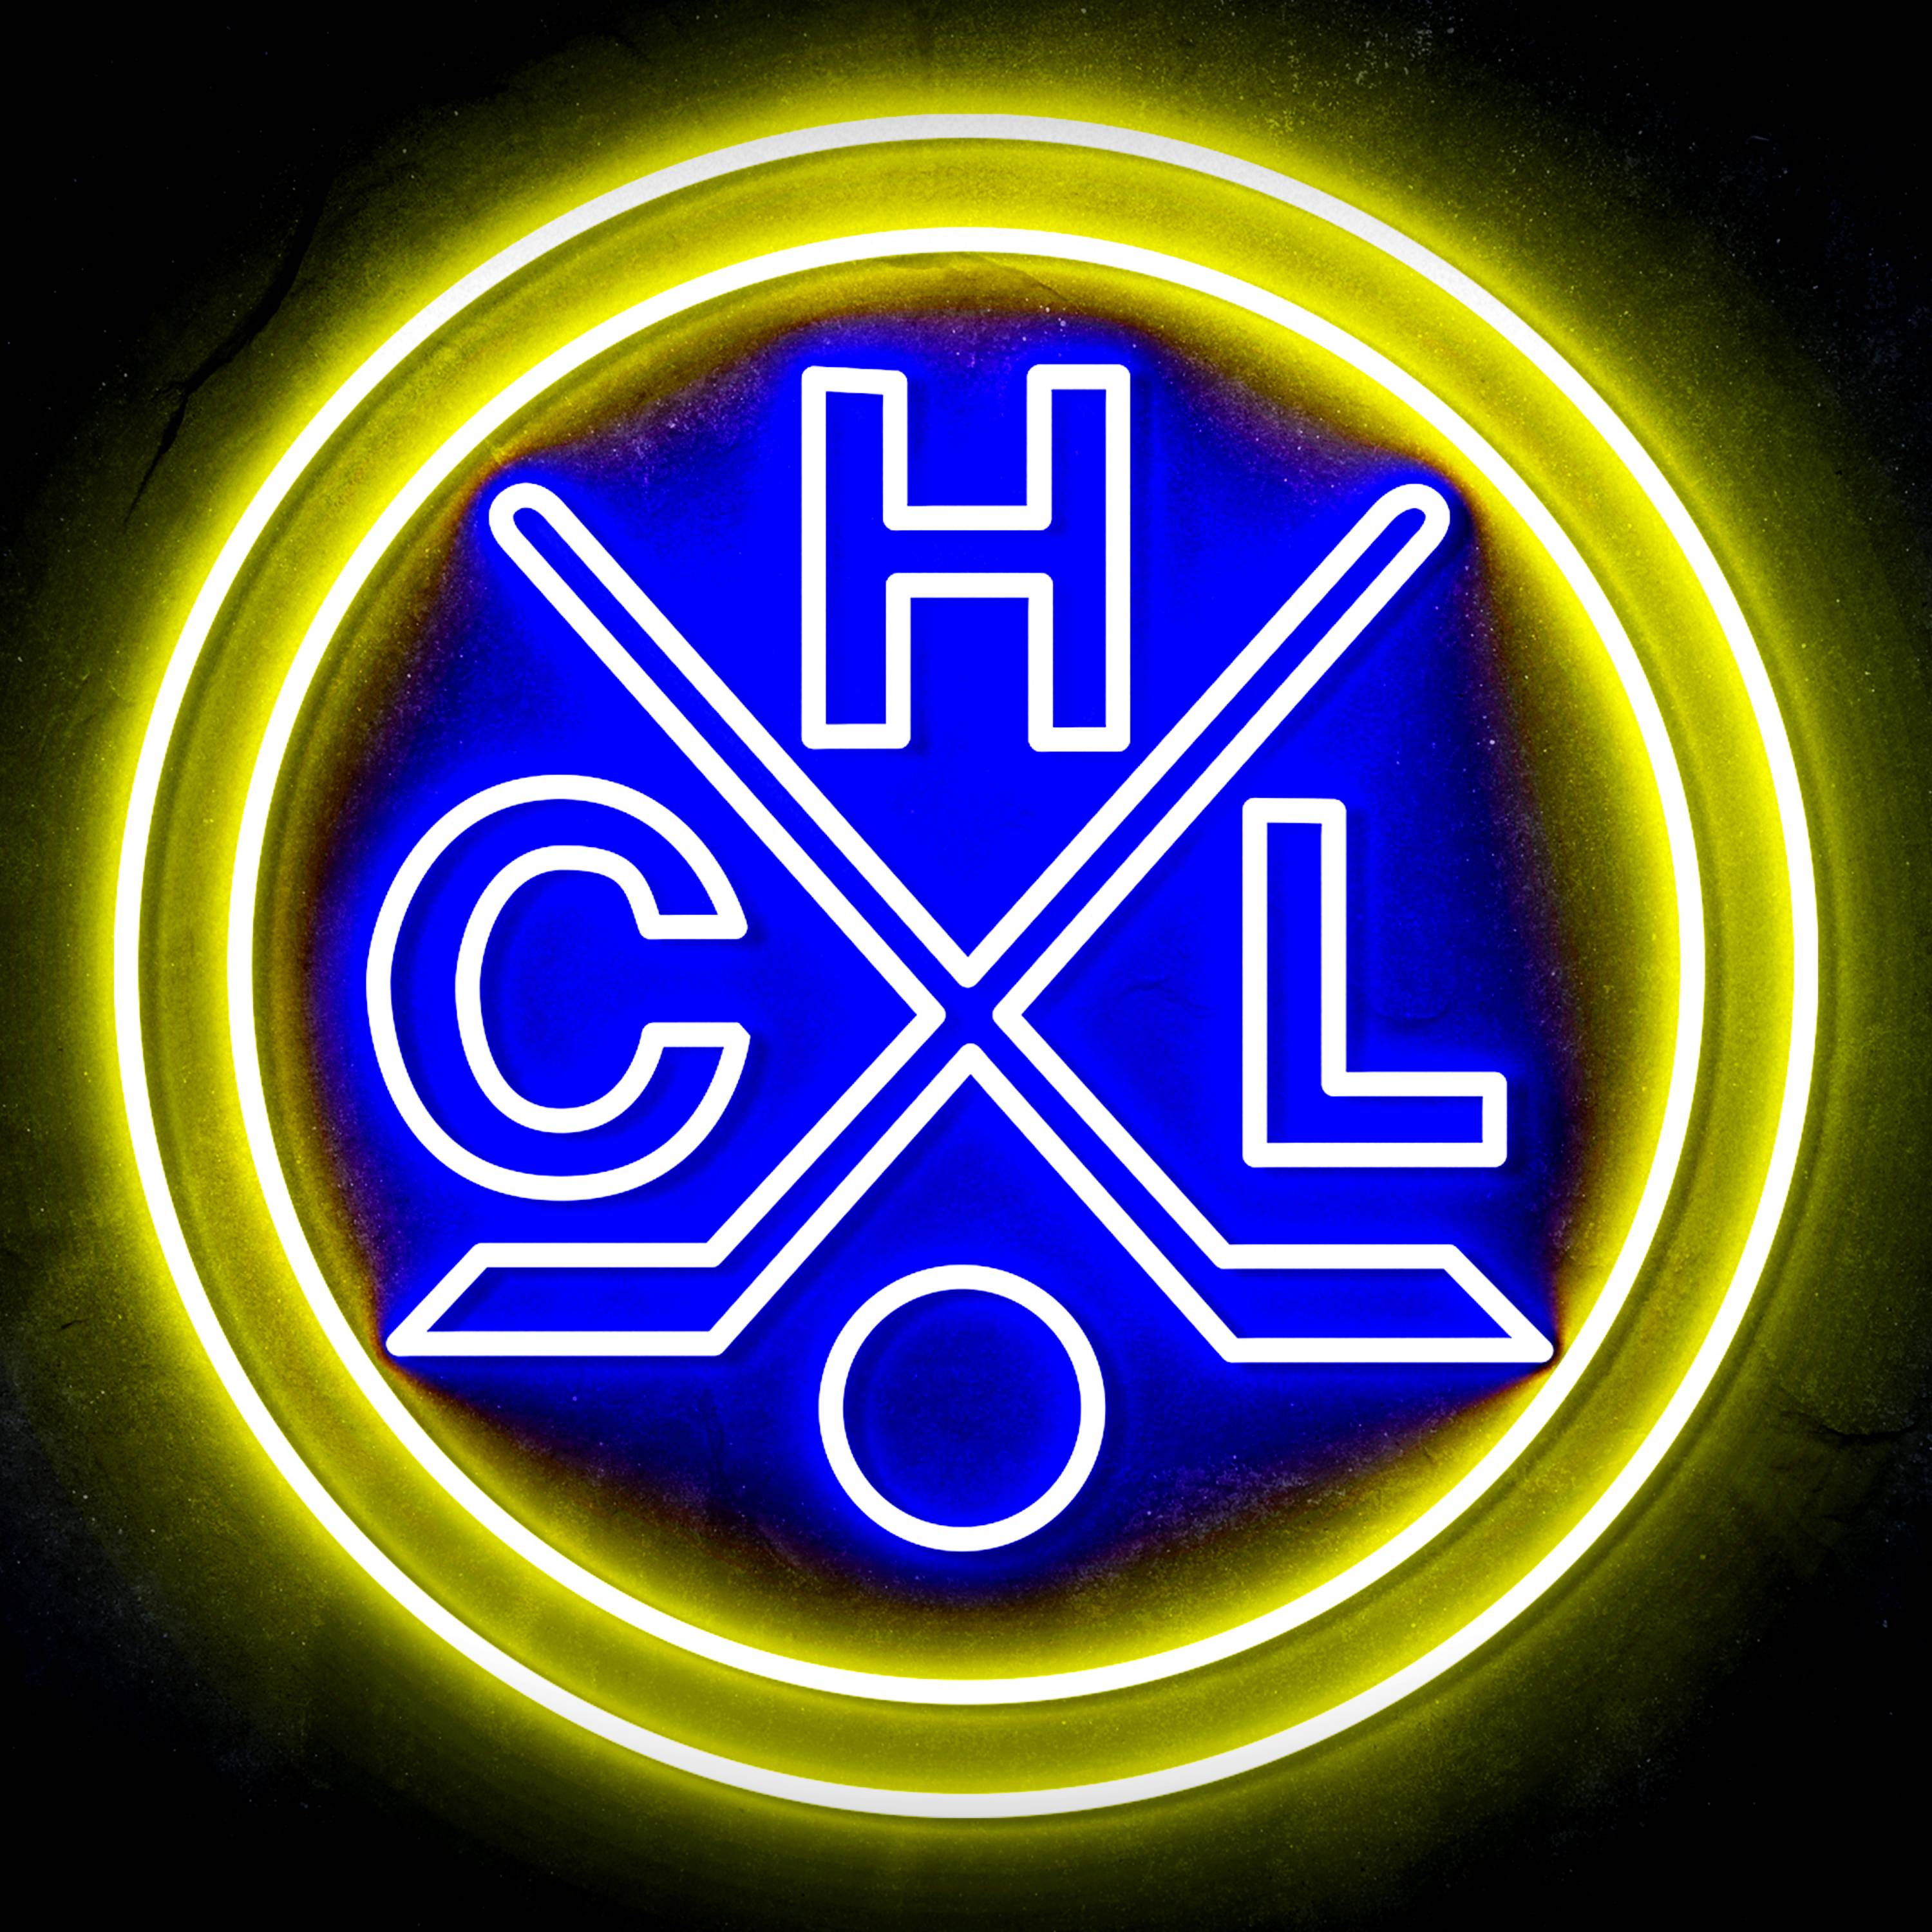 CHL HC Lugano LED Neon Sign